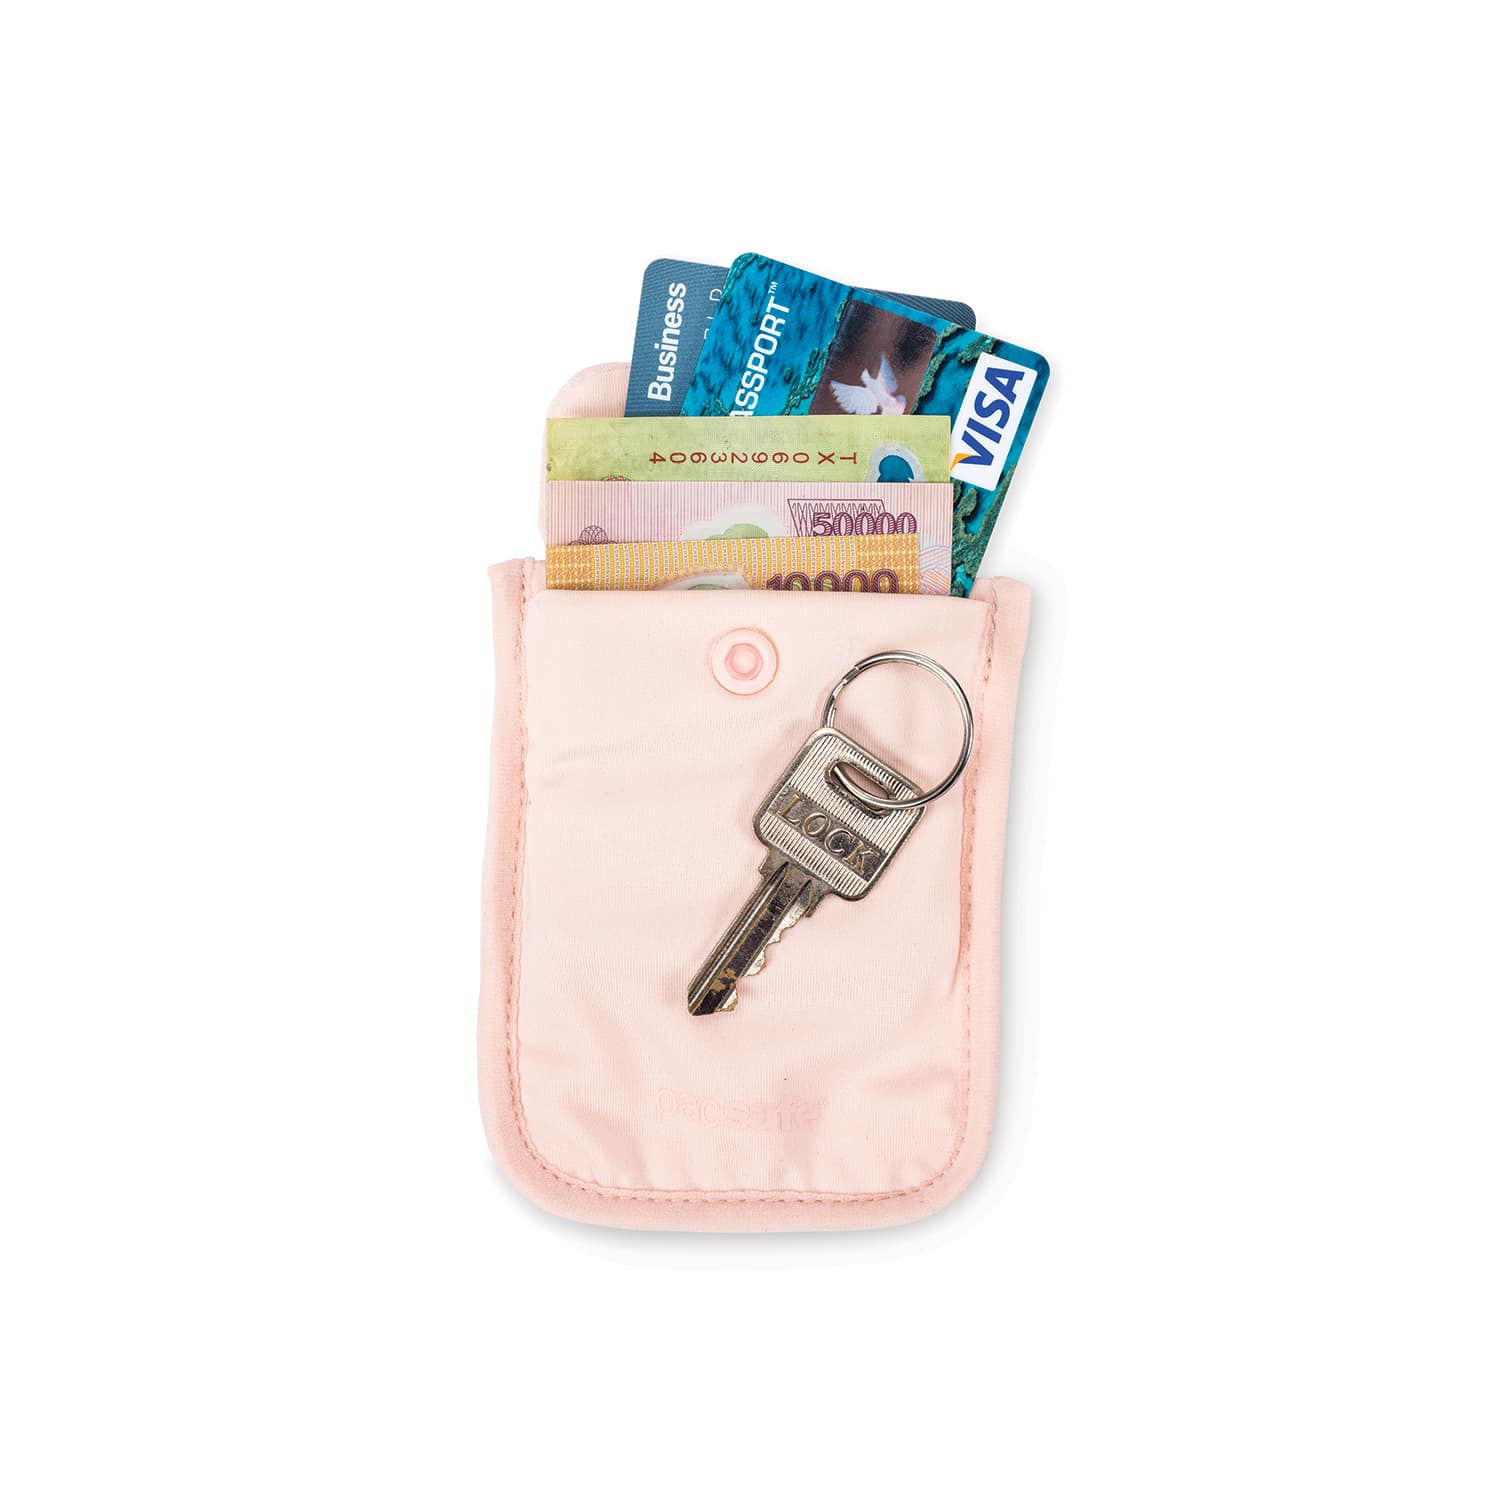 Travel Bra Wallet for Women, Hidden Bra Wallet Pickpocket Proof